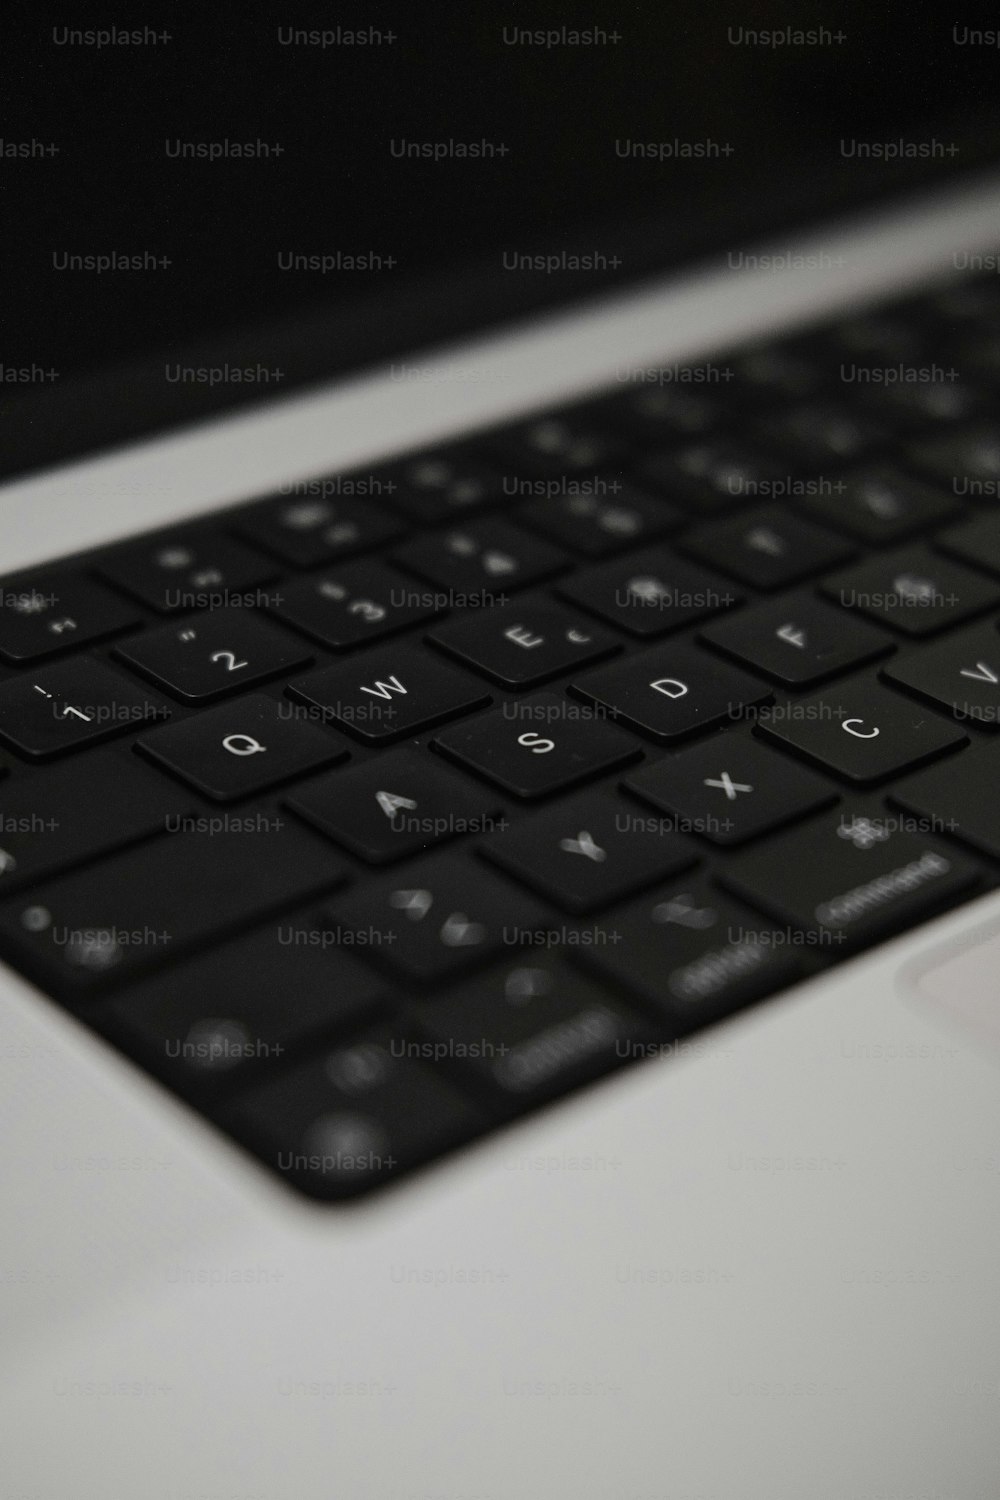 a black laptop keyboard